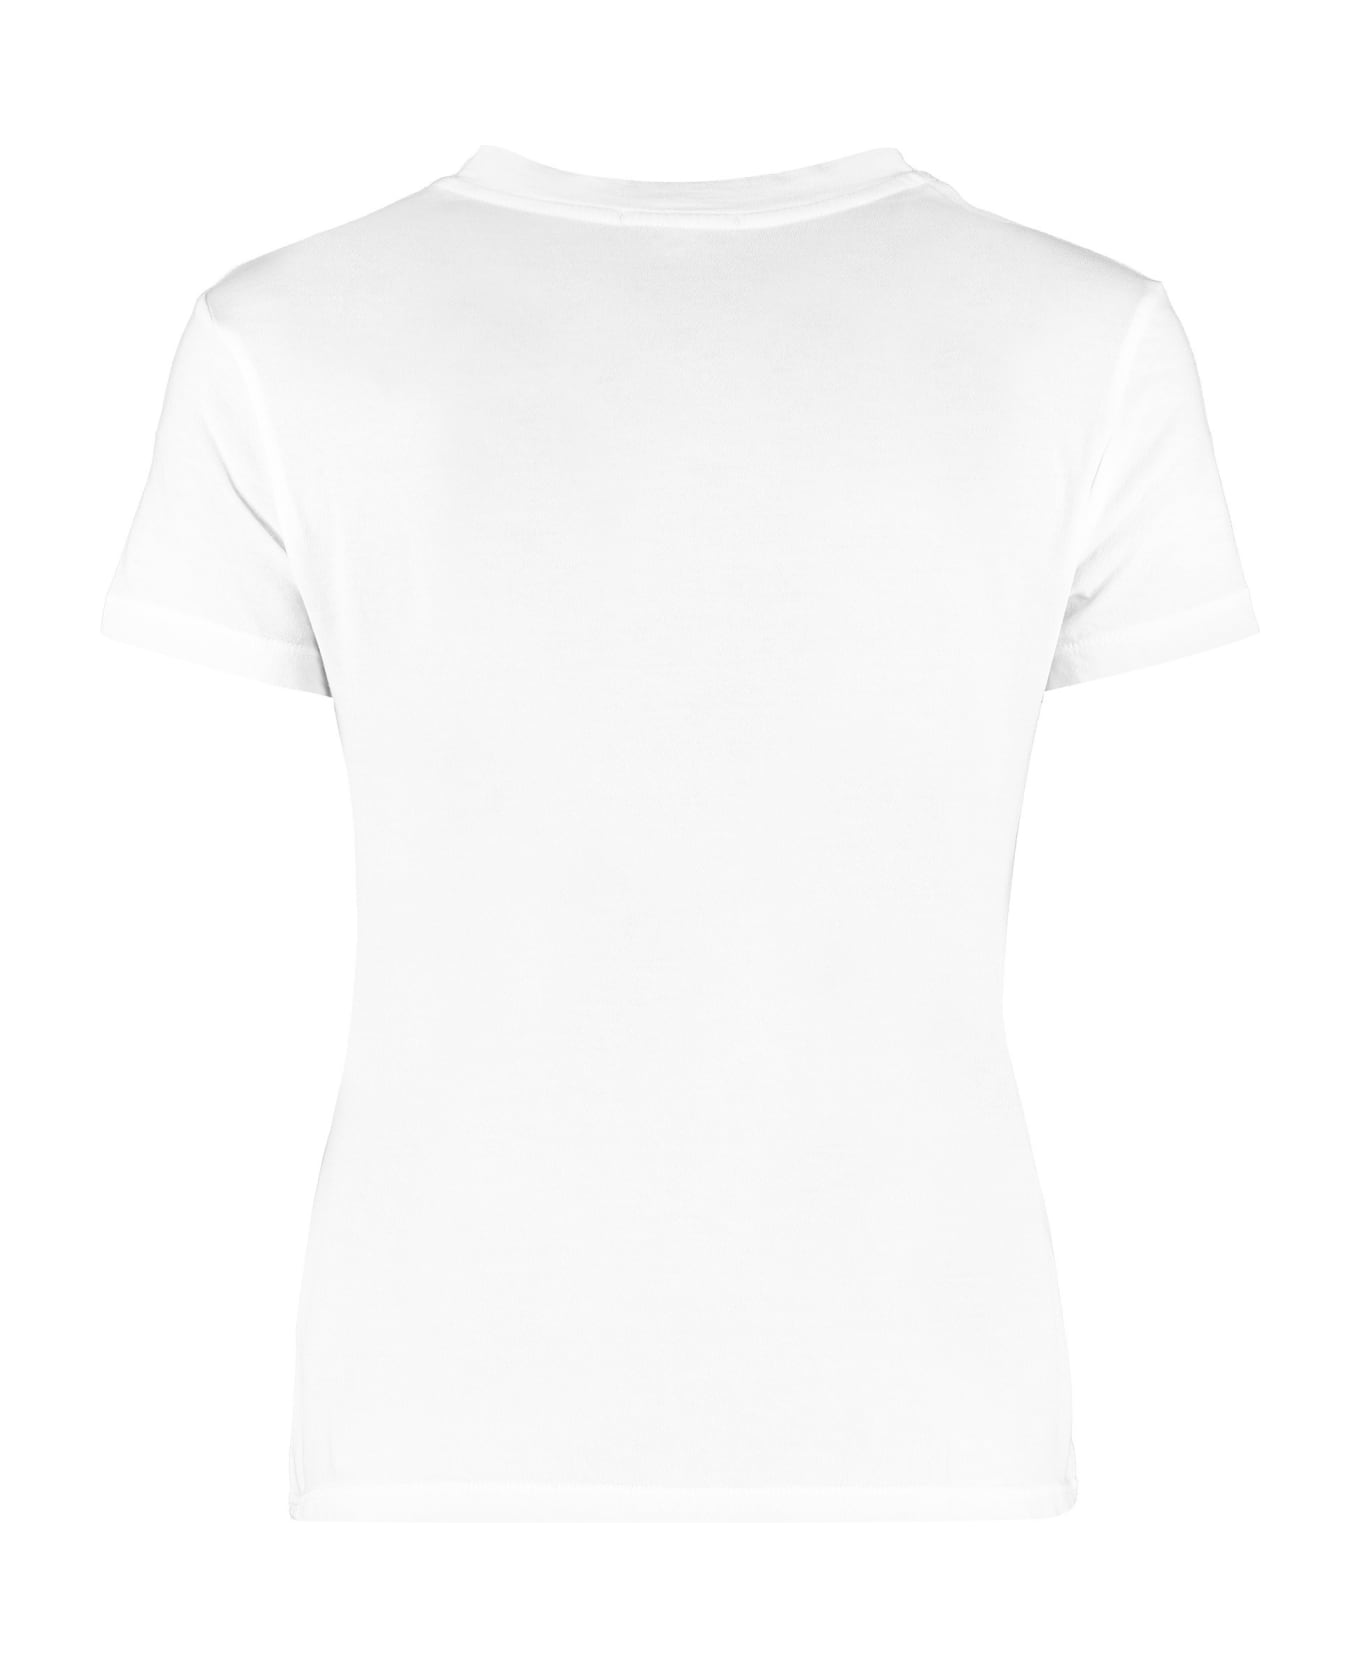 James Perse Cotton Crew-neck T-shirt - White